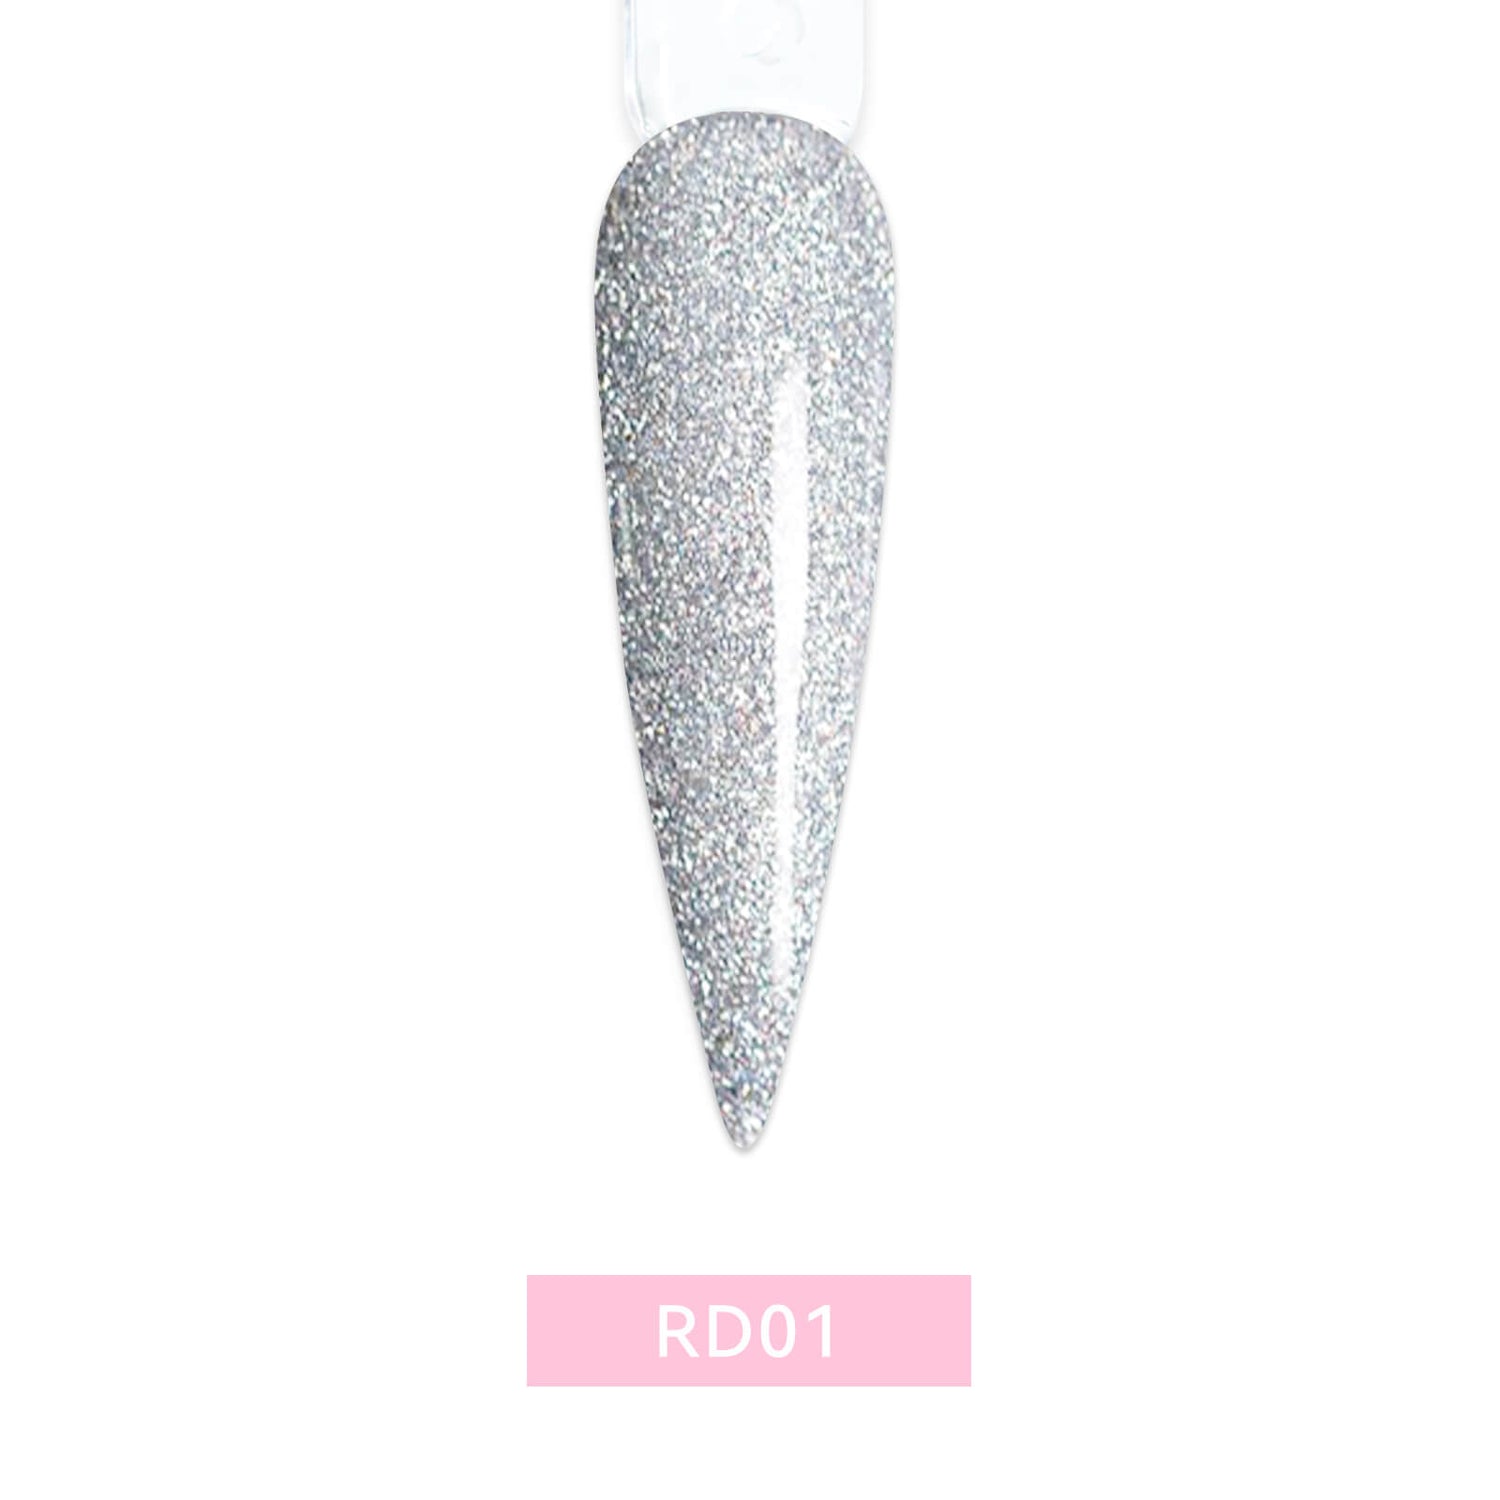 reflective-diamond-glitter-gel-polish-RD01-flash-off